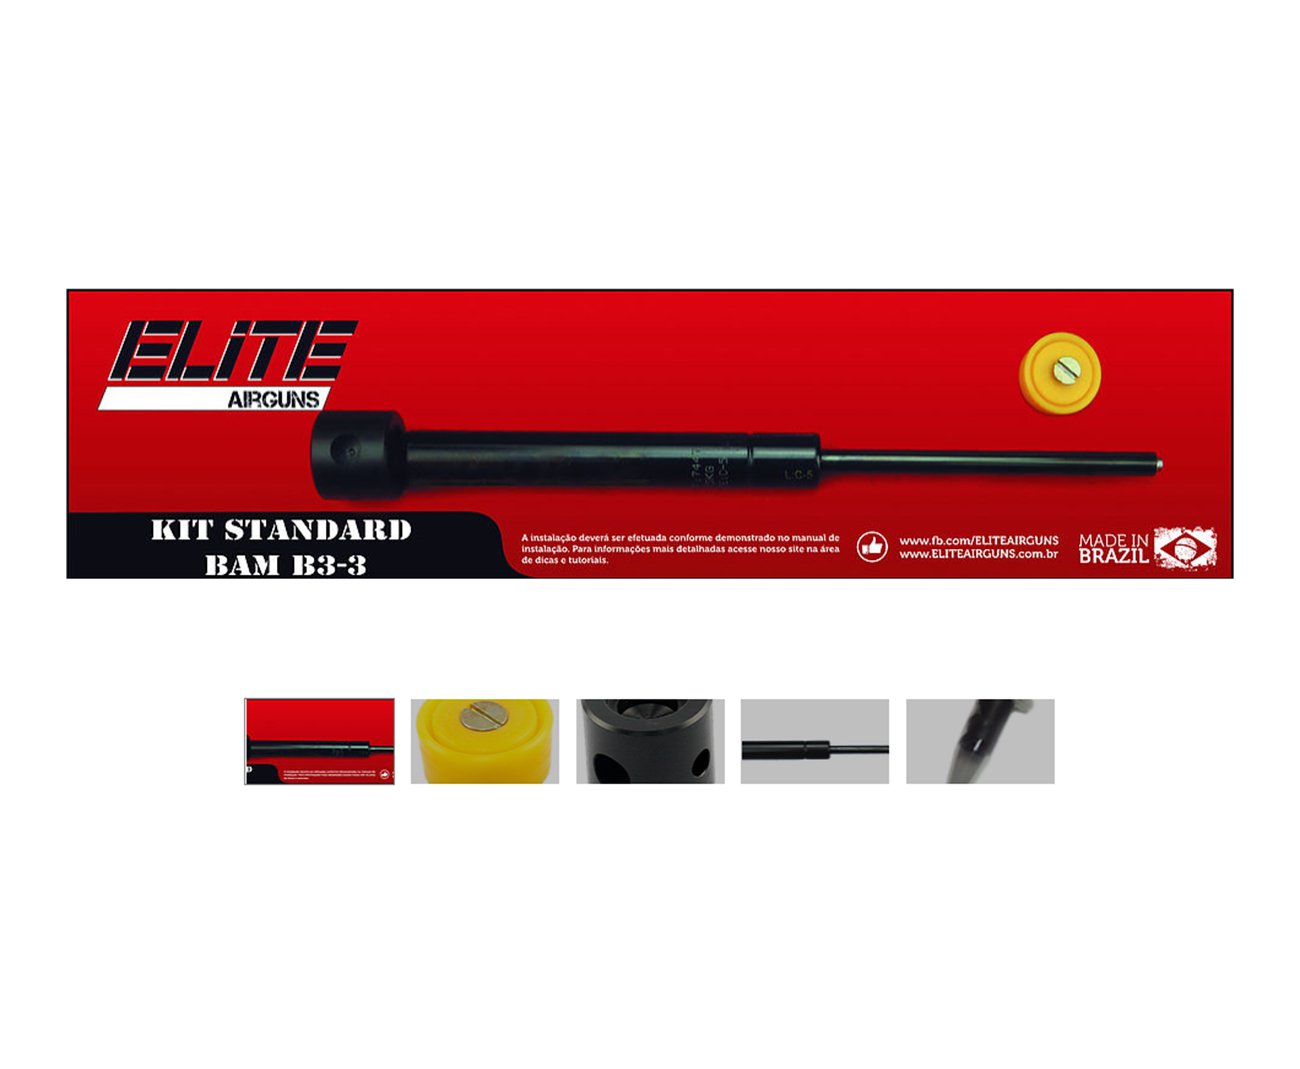 Kit Customização Standard Carabina Bam B3-3 -45kg - Elite Airguns